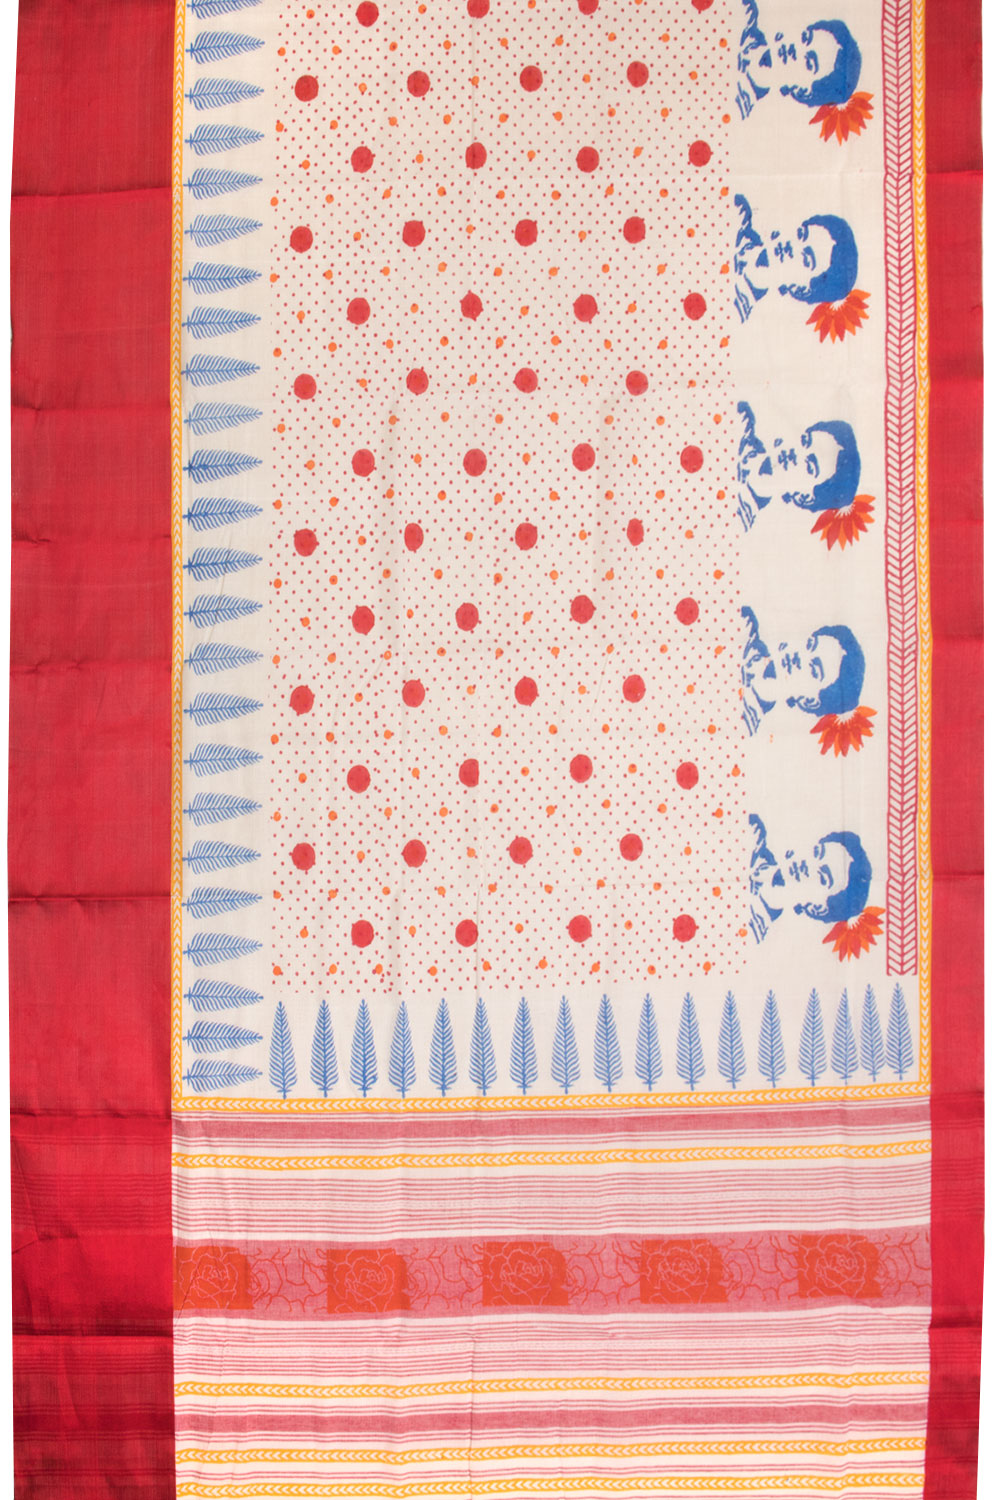 Off White Hand Block Print Dhaniakhali Cotton Saree With Satin Border 10068908 - Avishya